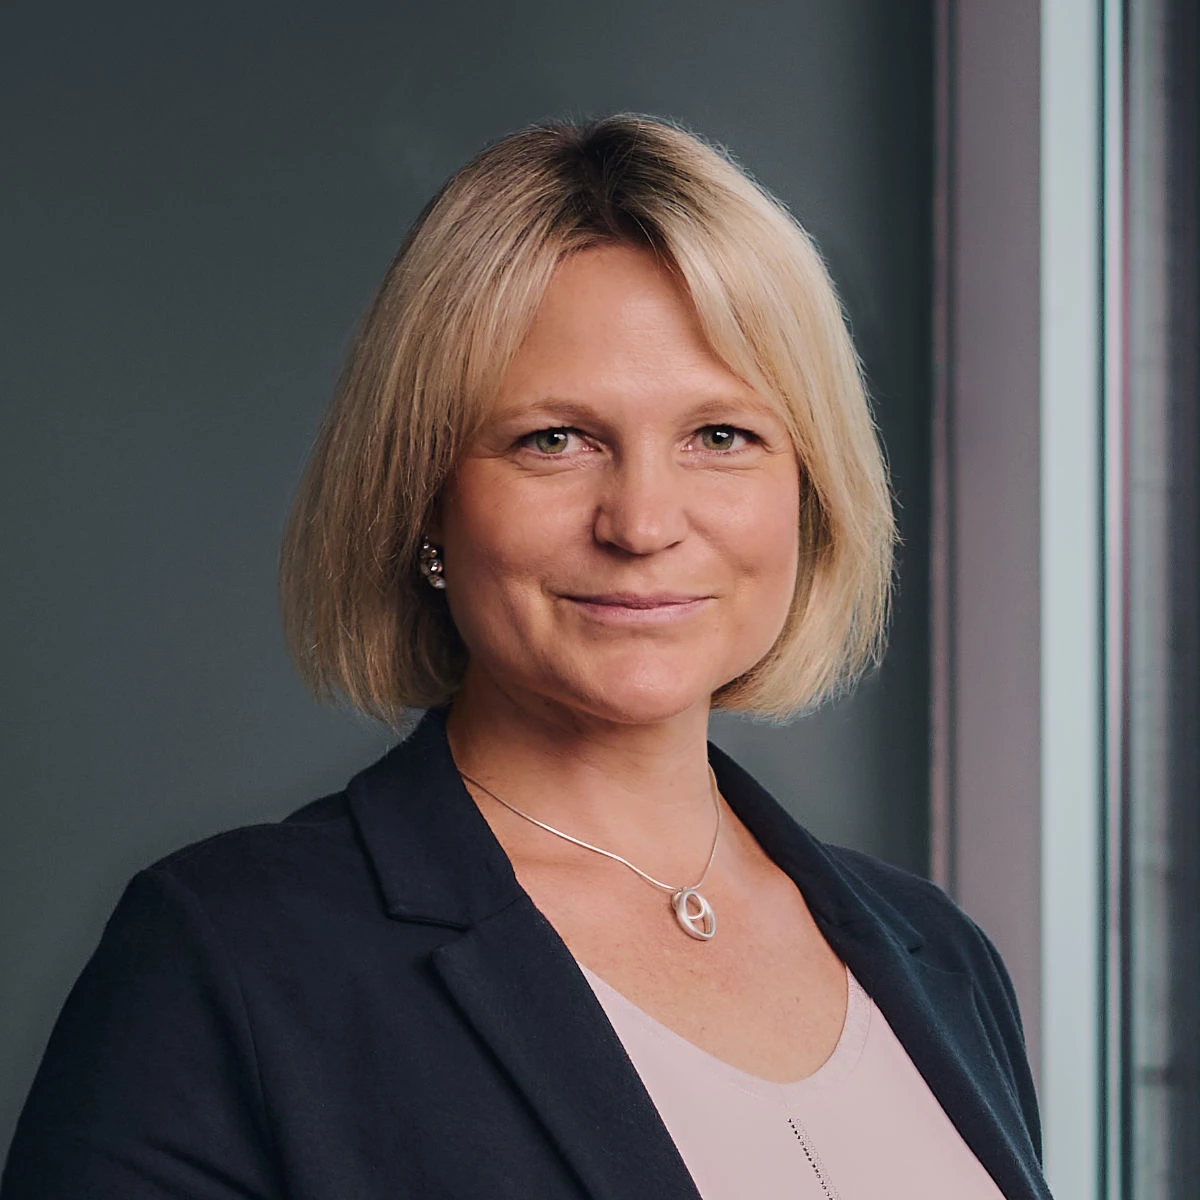 Annette Kroger, CEO, North & Central Europe, Allianz Real Estate